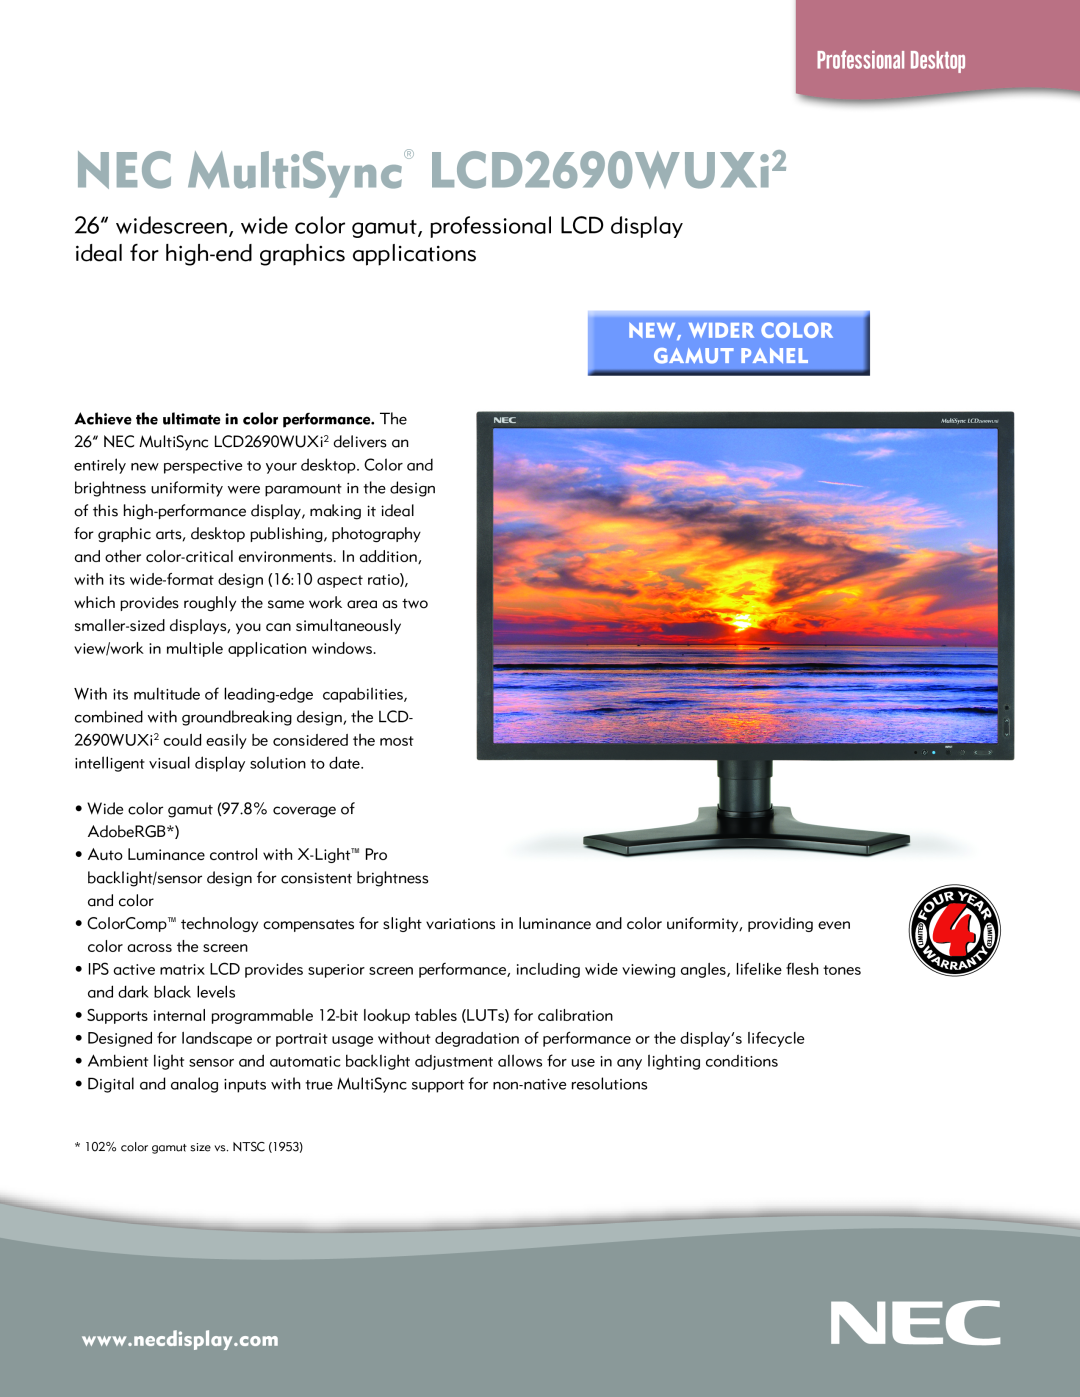 NEC manual NEC MultiSync LCD2690WUXi2, Professional Desktop, New, Wider Color Gamut Panel 